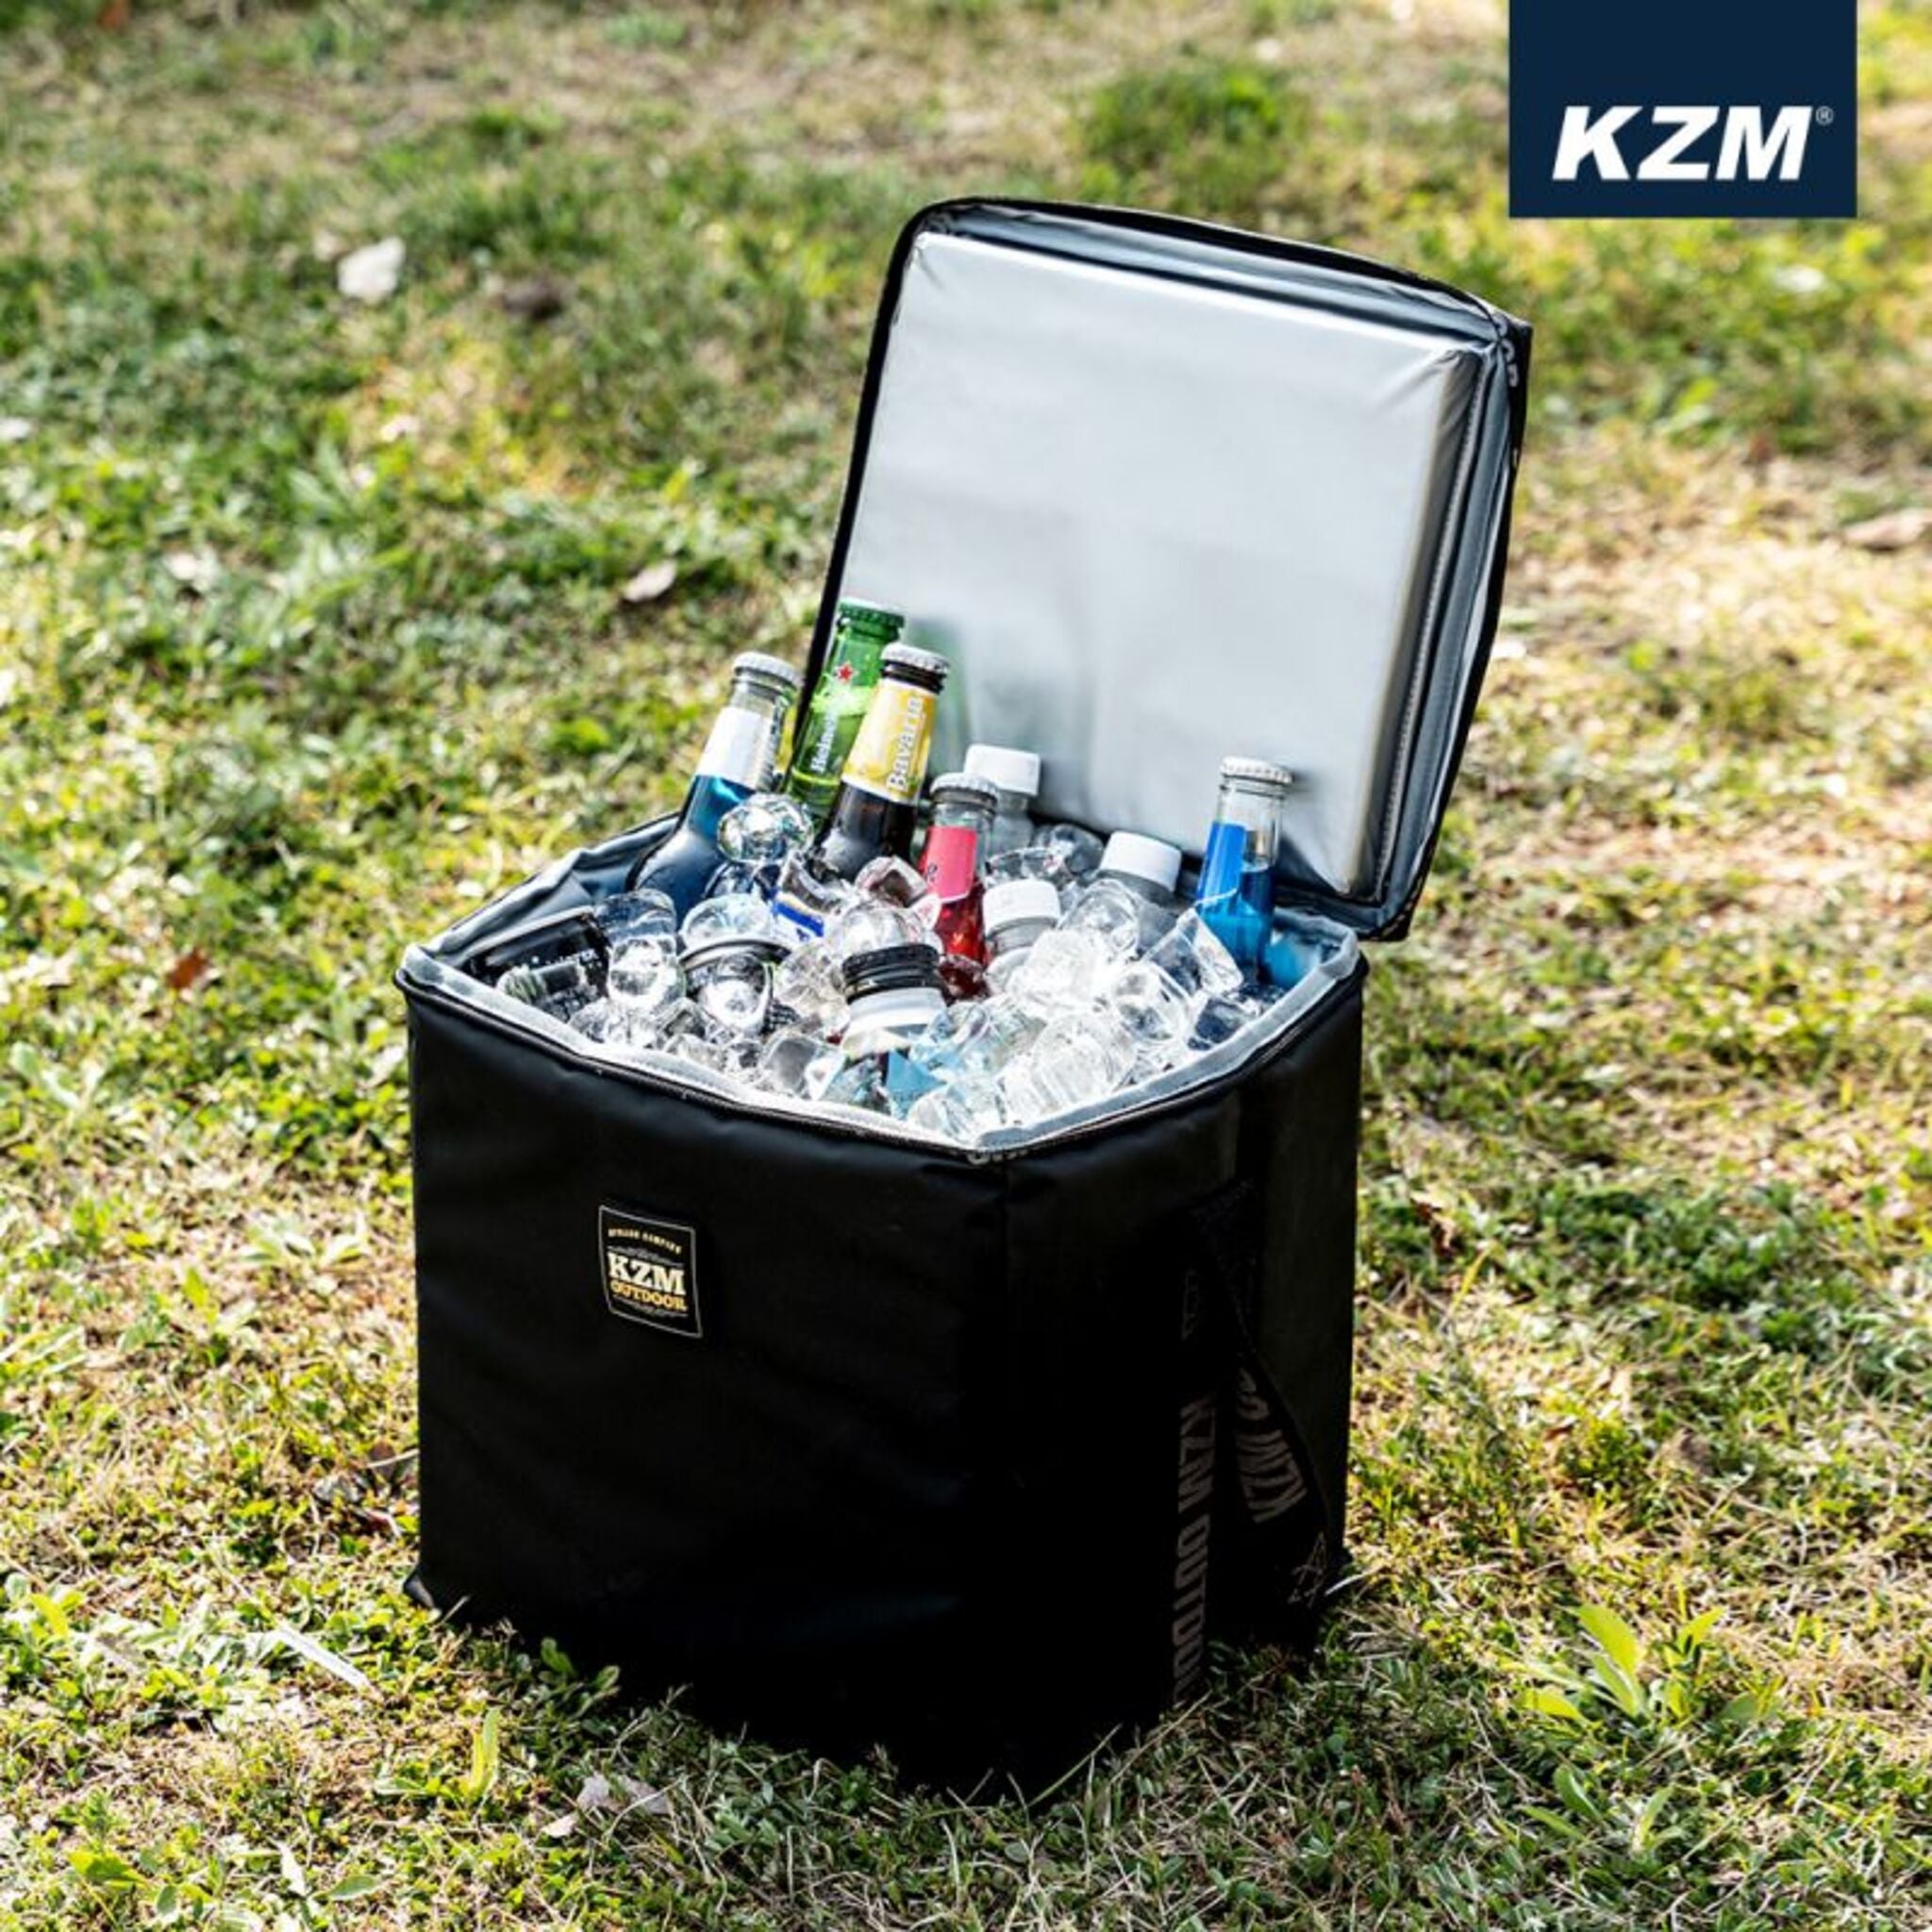 KAZMI KZM 素面個性保冷袋 15L 黑色 K20T3K007